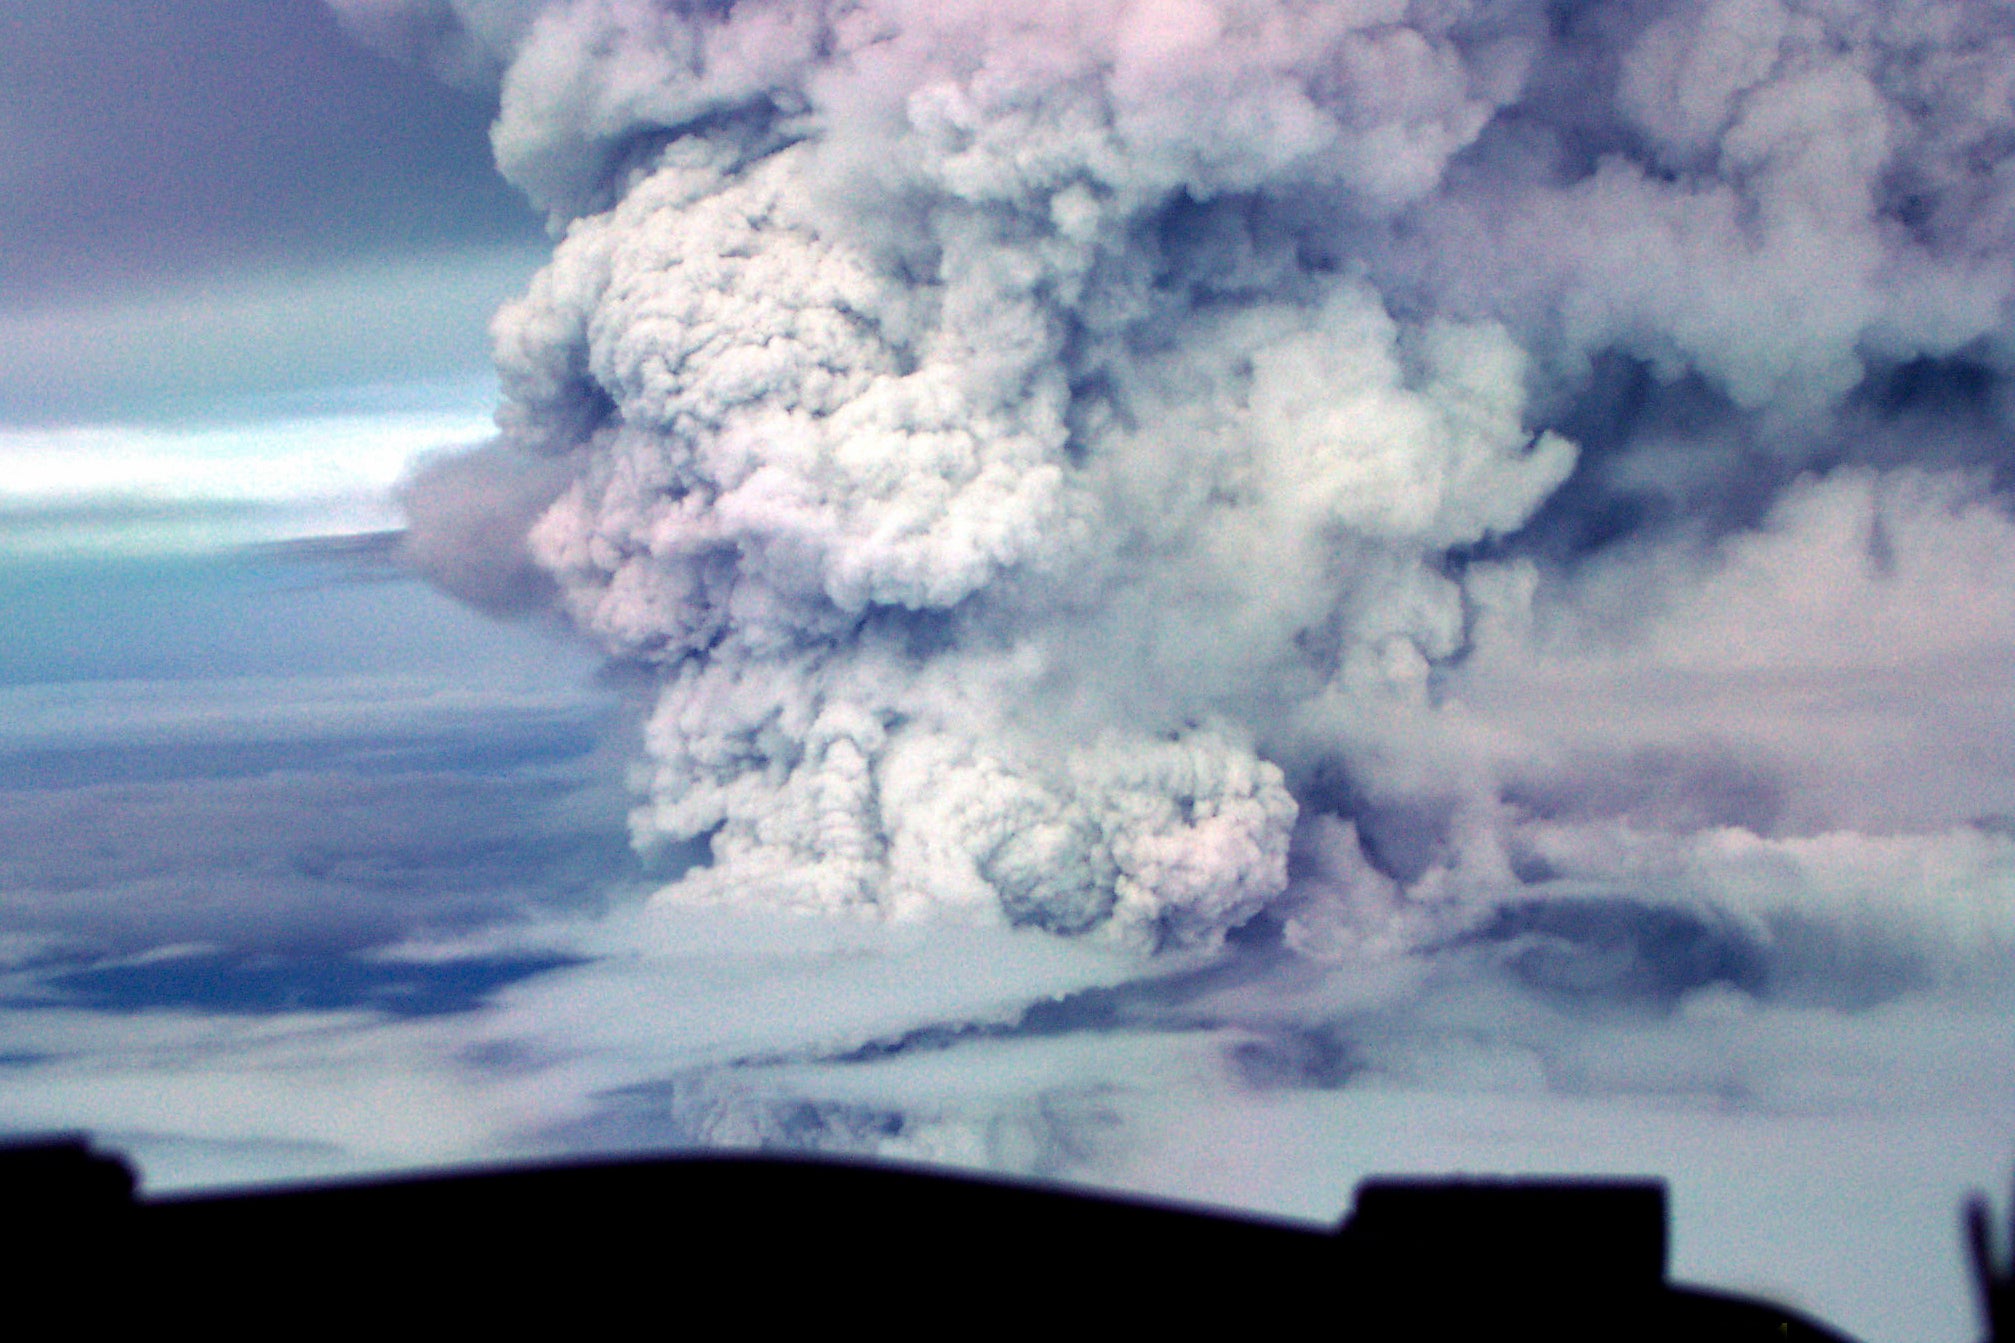 Mount Ulawun erupting, sending plumes of smoke and ash high into the sky.